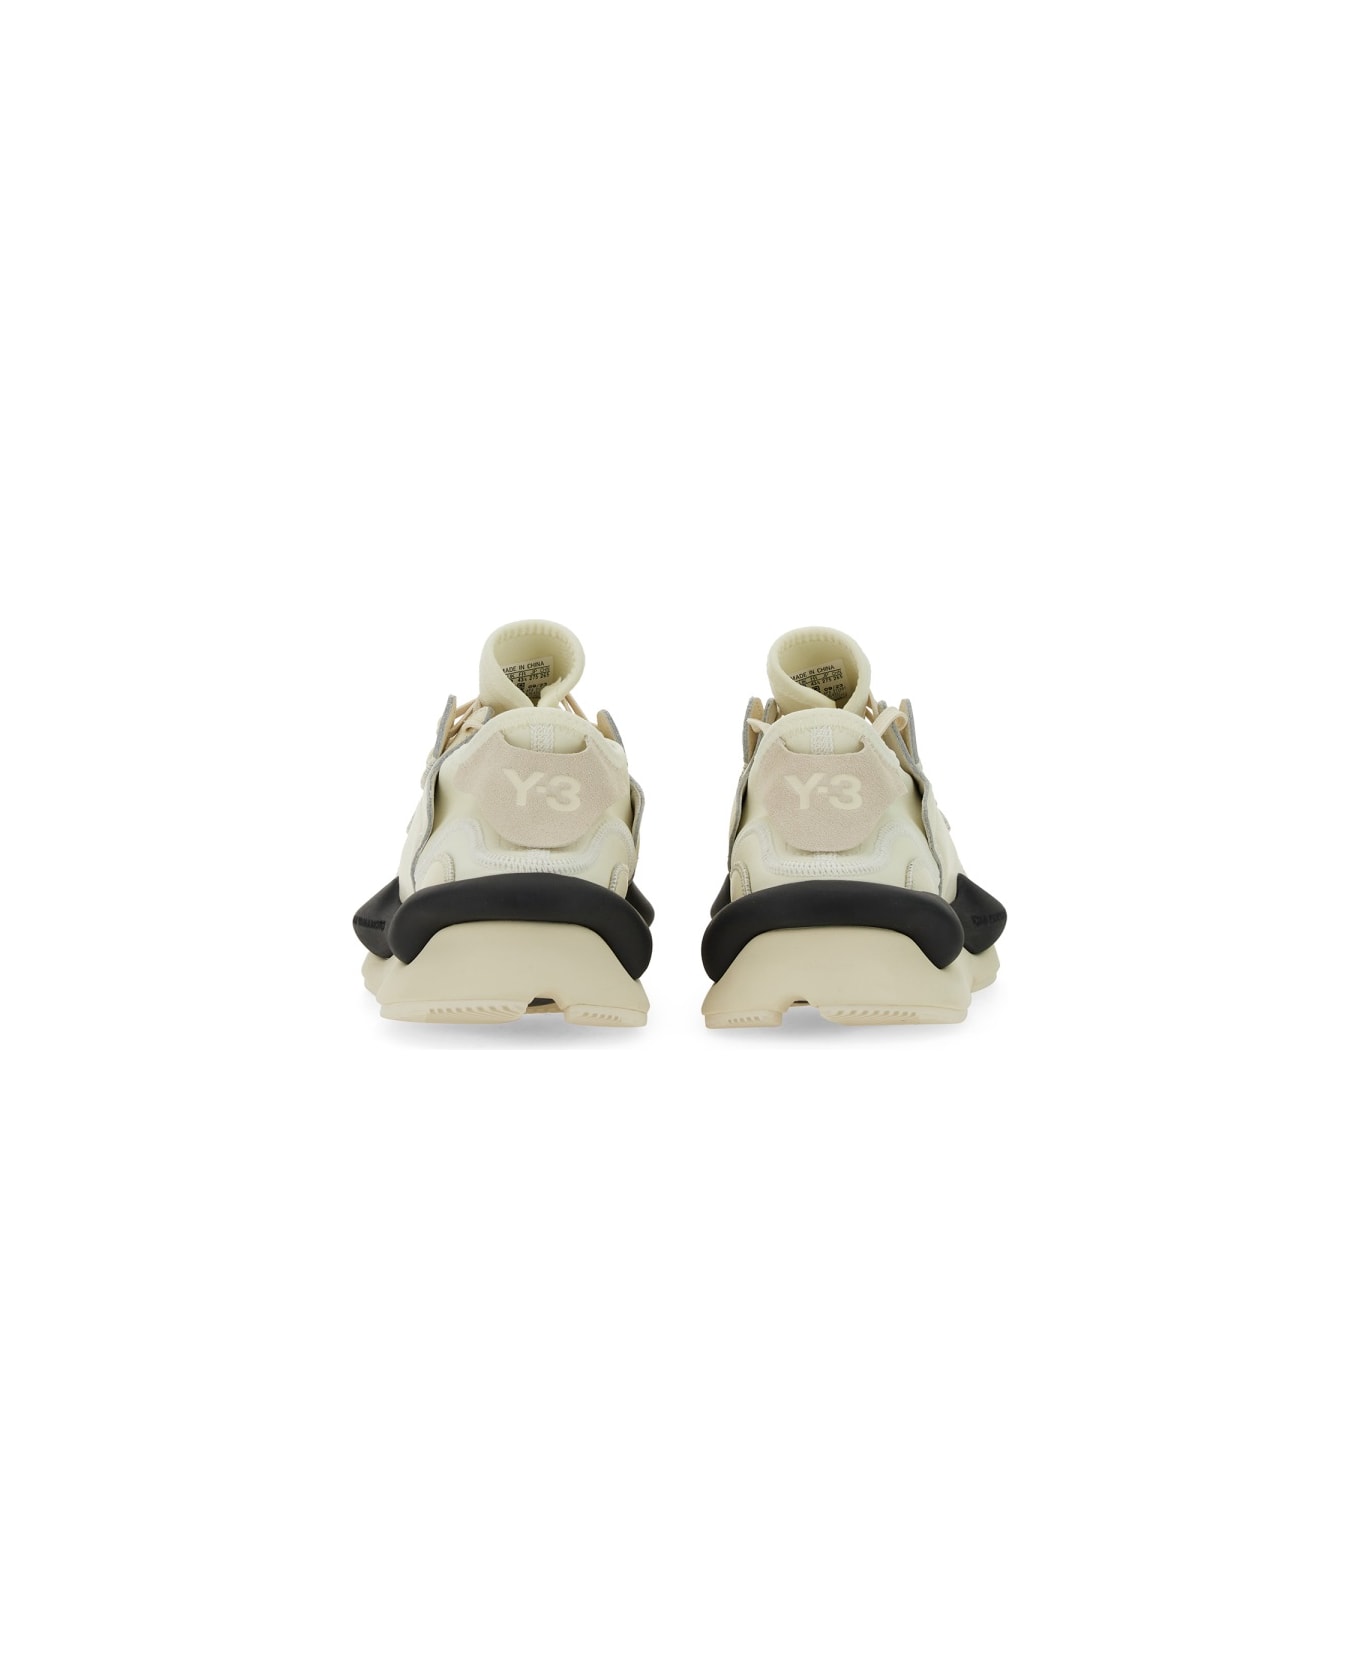 Y-3 "y-3 Kaiwa" Sneaker - WHITE